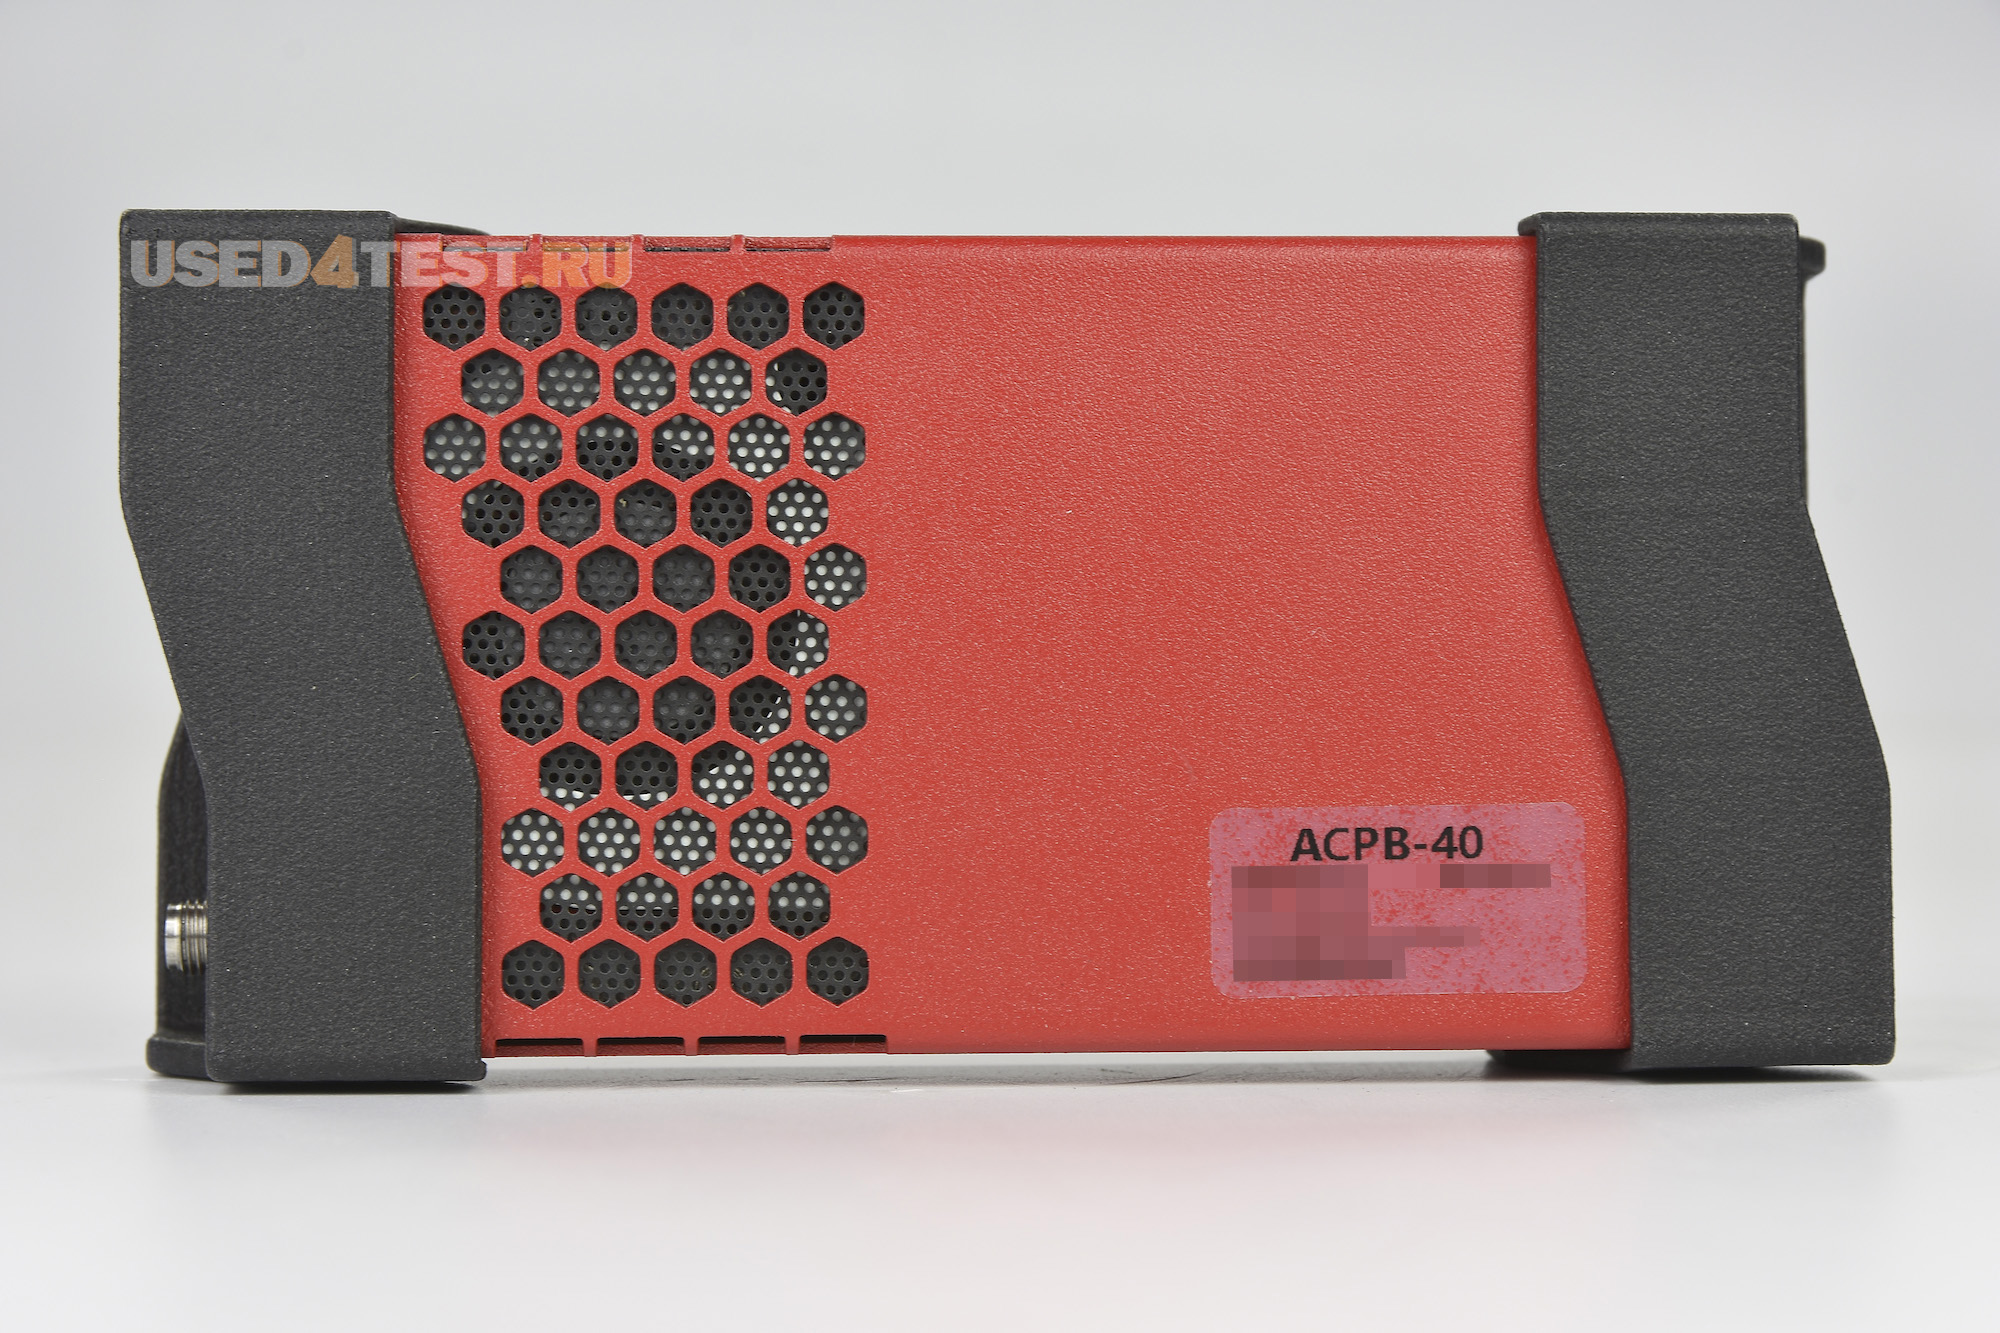 Анализатор спектра реального времени
ГЦМО ЭМС АСРВ-40
с диапазоном от 9 кГц до 40 ГГц